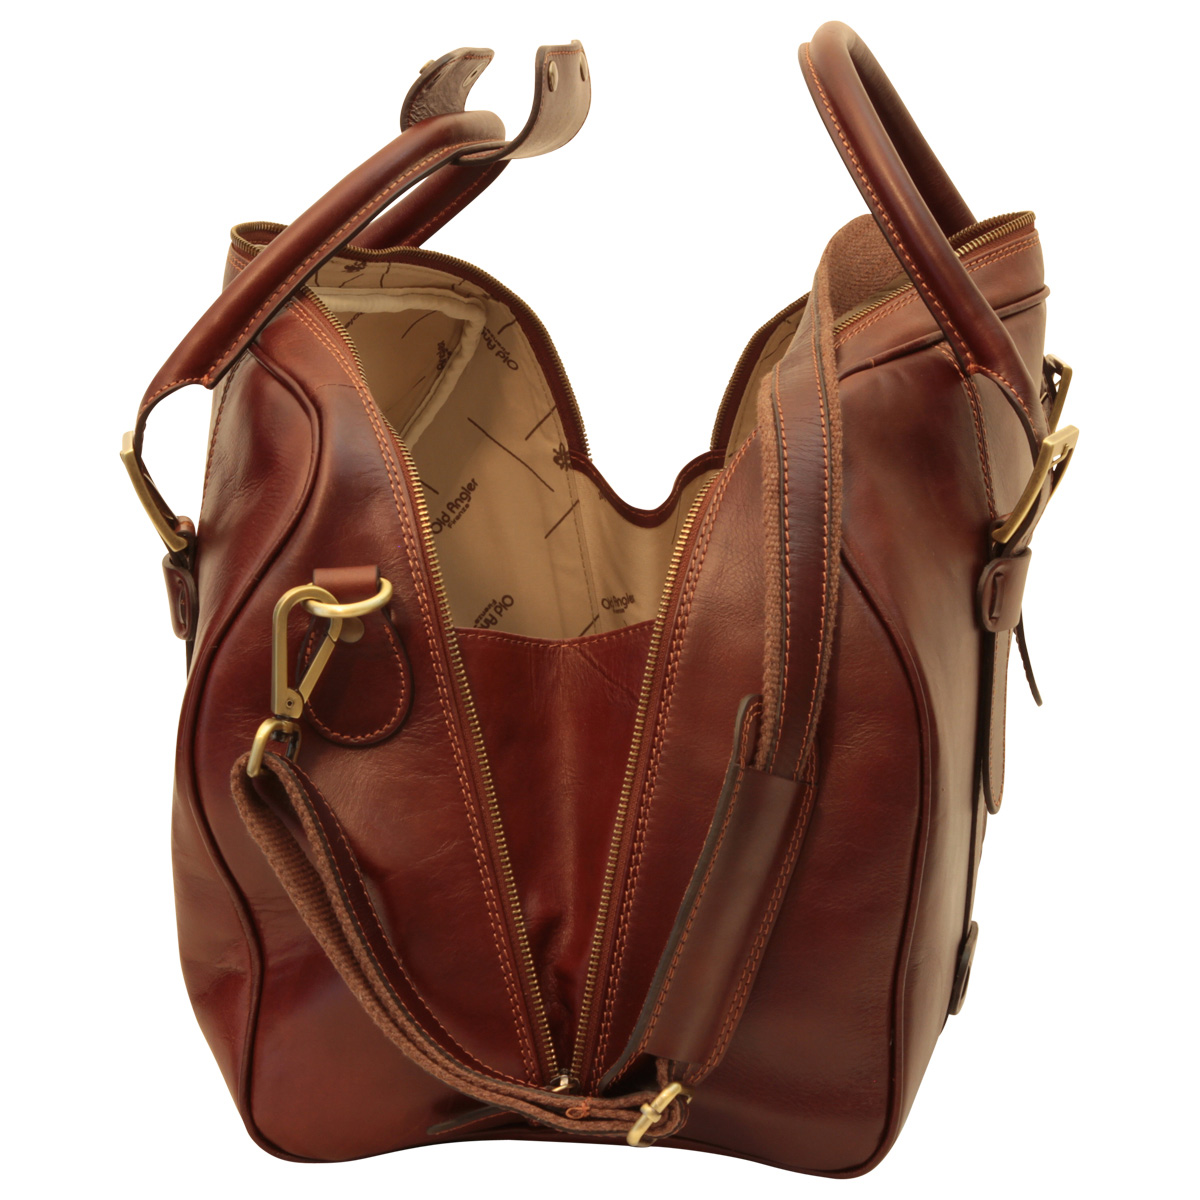 Cowhide leather duffel bag - Brown | 410889MA UK | Old Angler Firenze